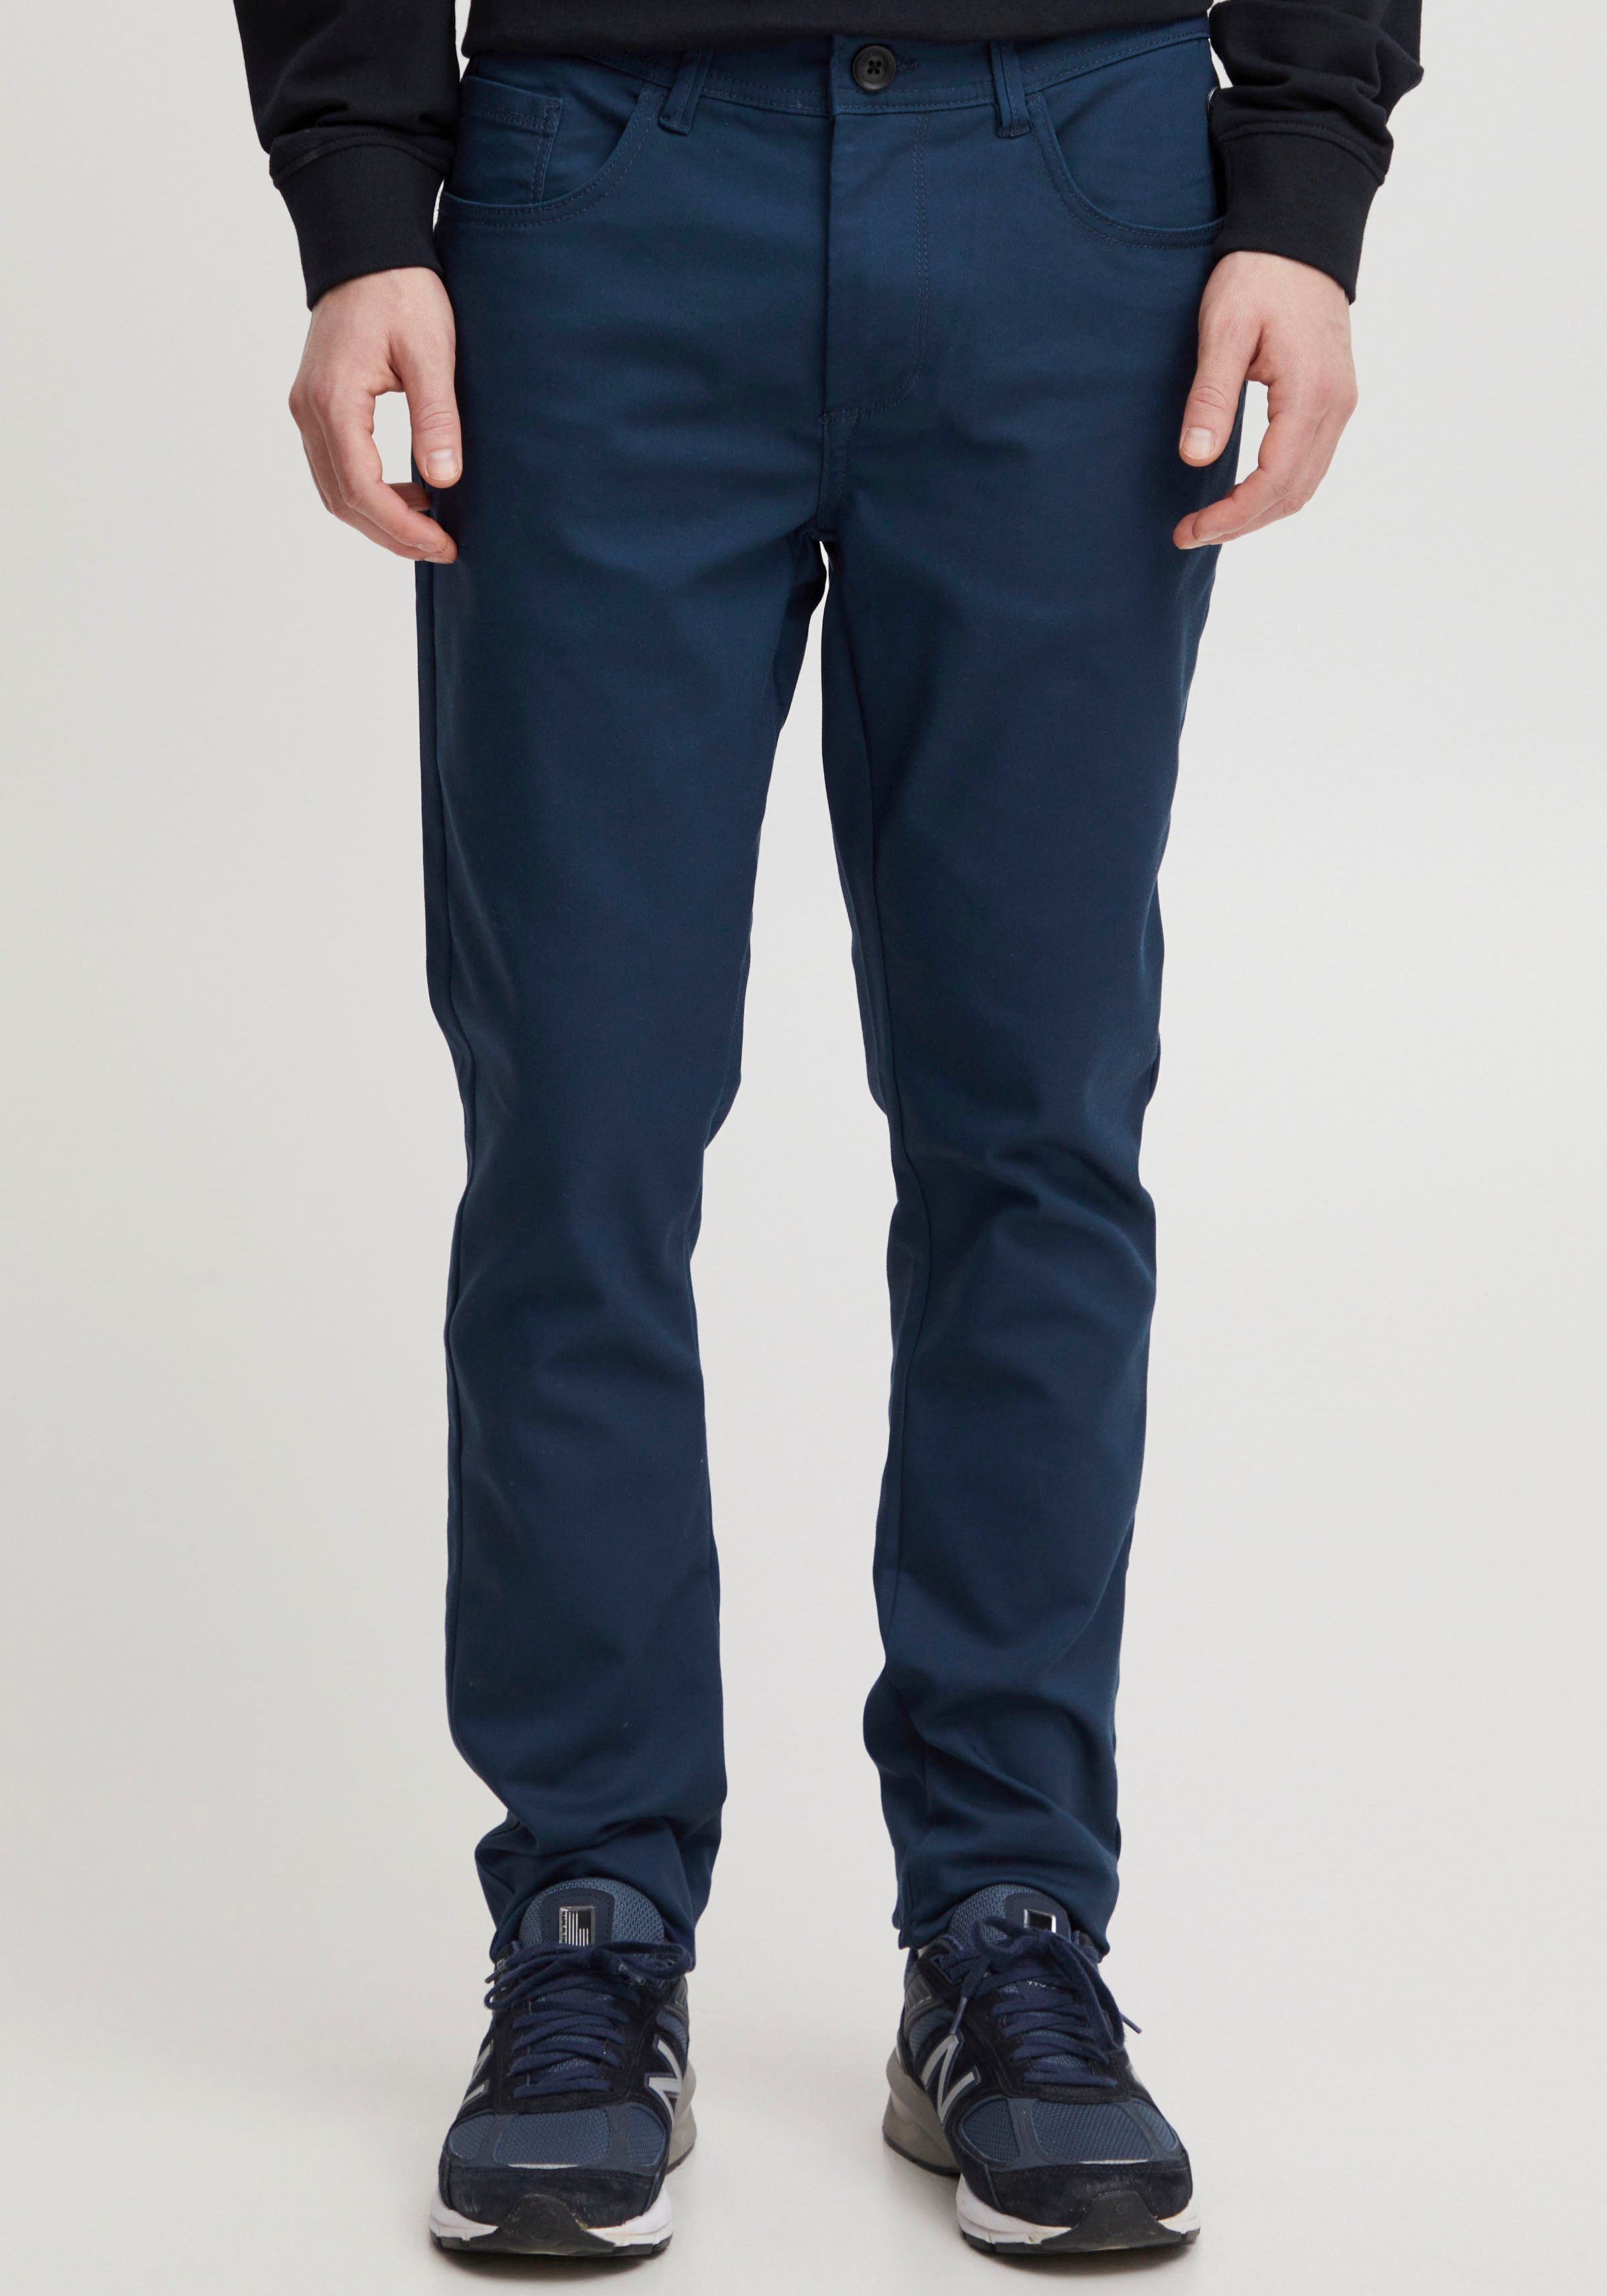 Hohe Qualität Blend 5-Pocket-Hose BL-Trousers blue